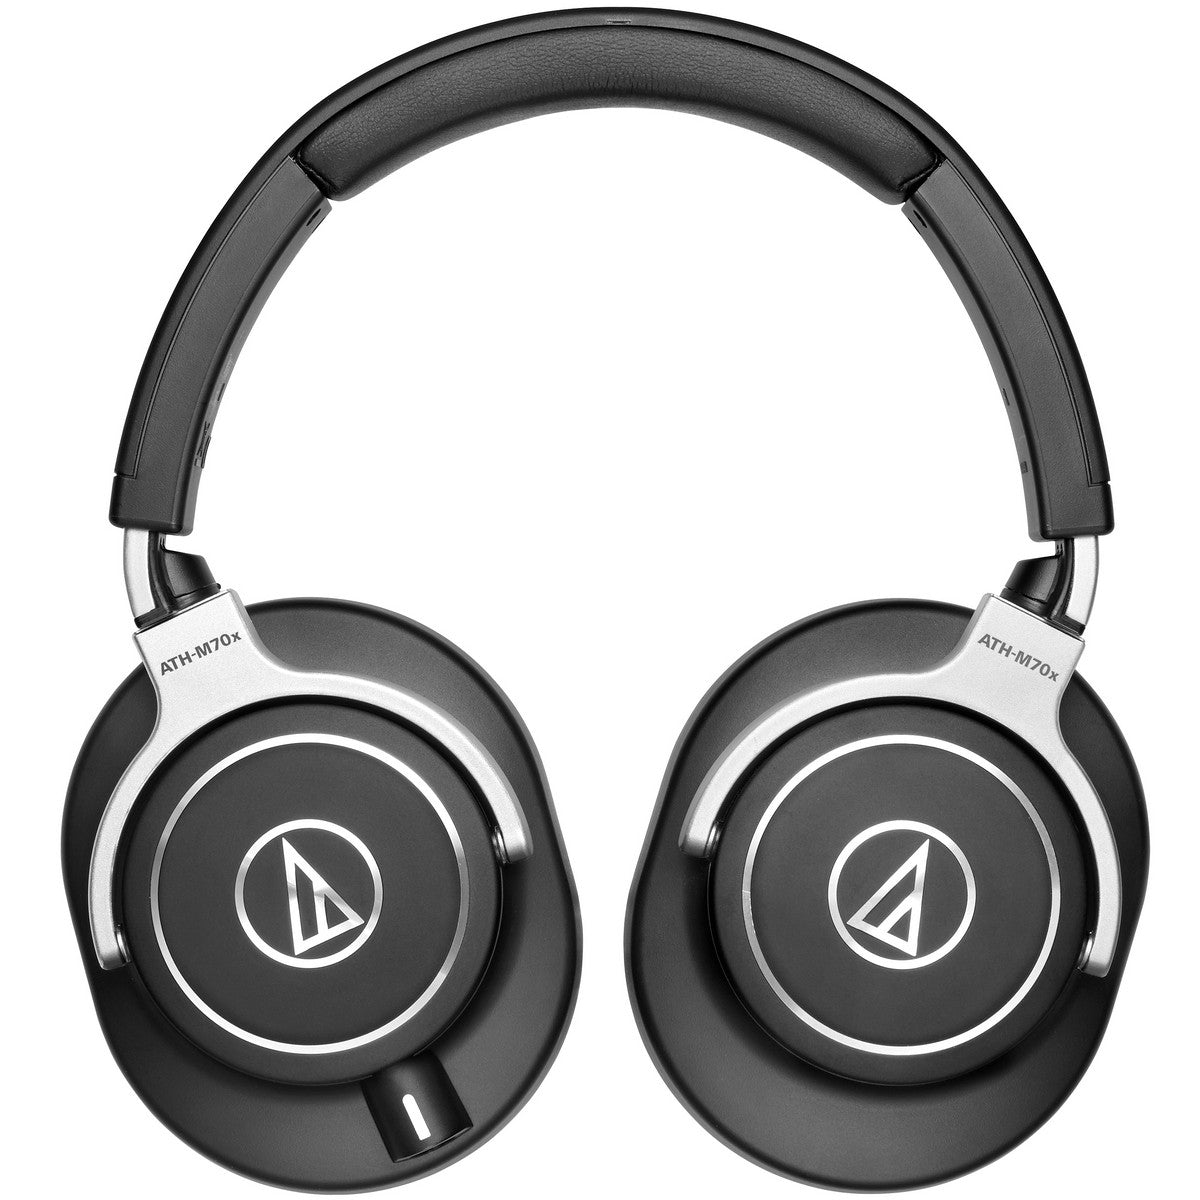 Audio-Technica ATH-M70x | M Series Professional Closed Back Dynamic Monitor Headphone